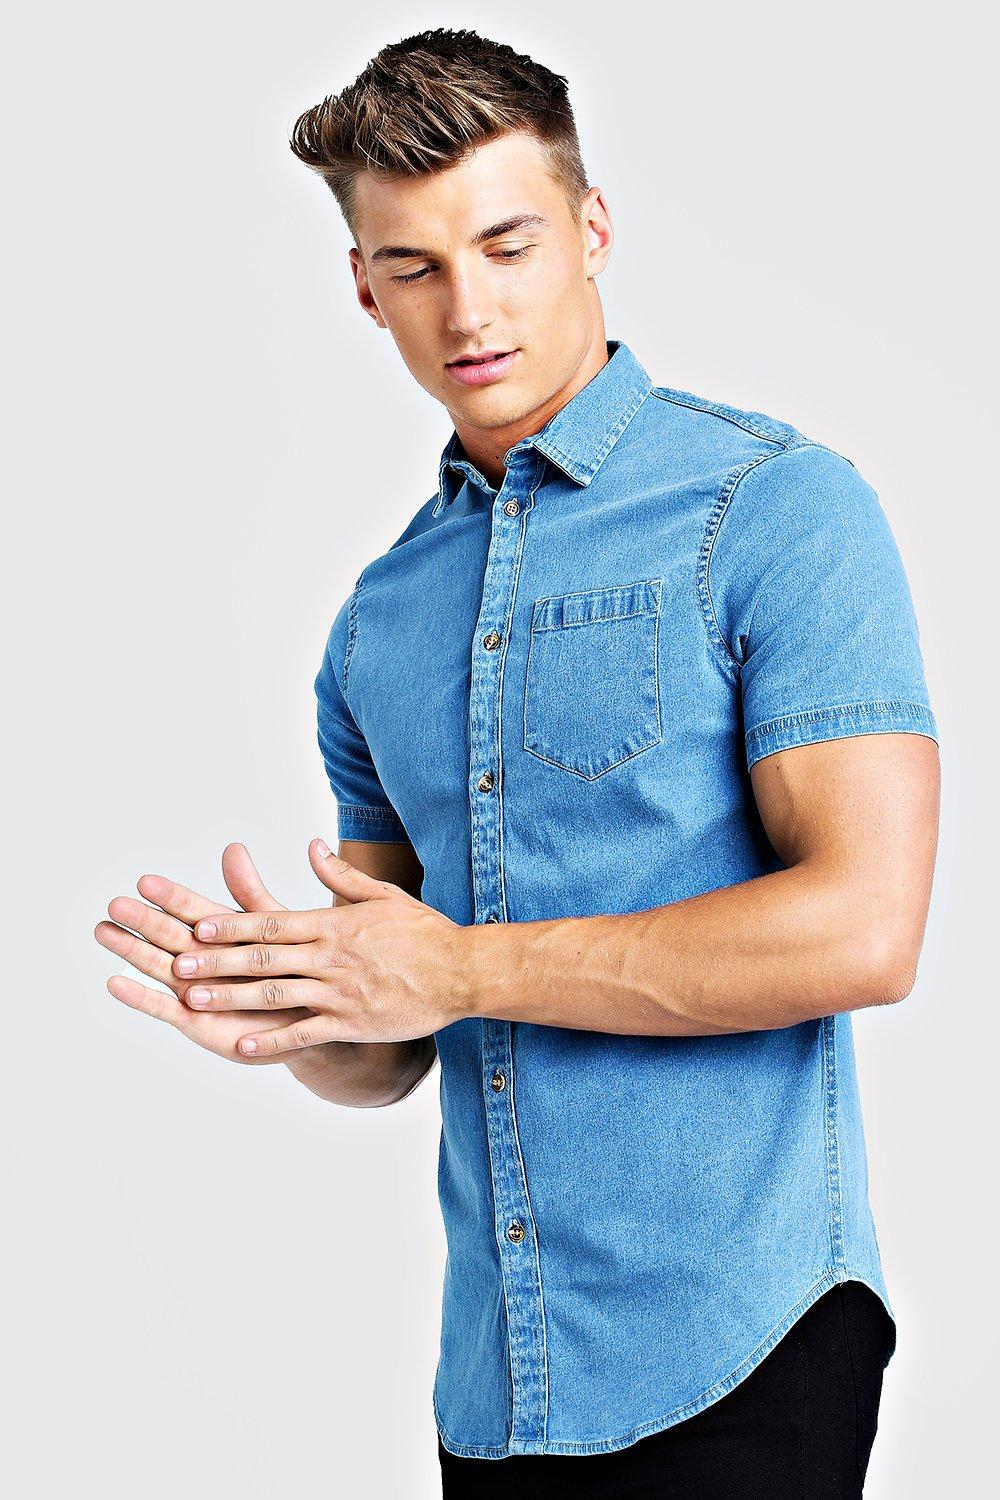 short sleeve blue jean shirts